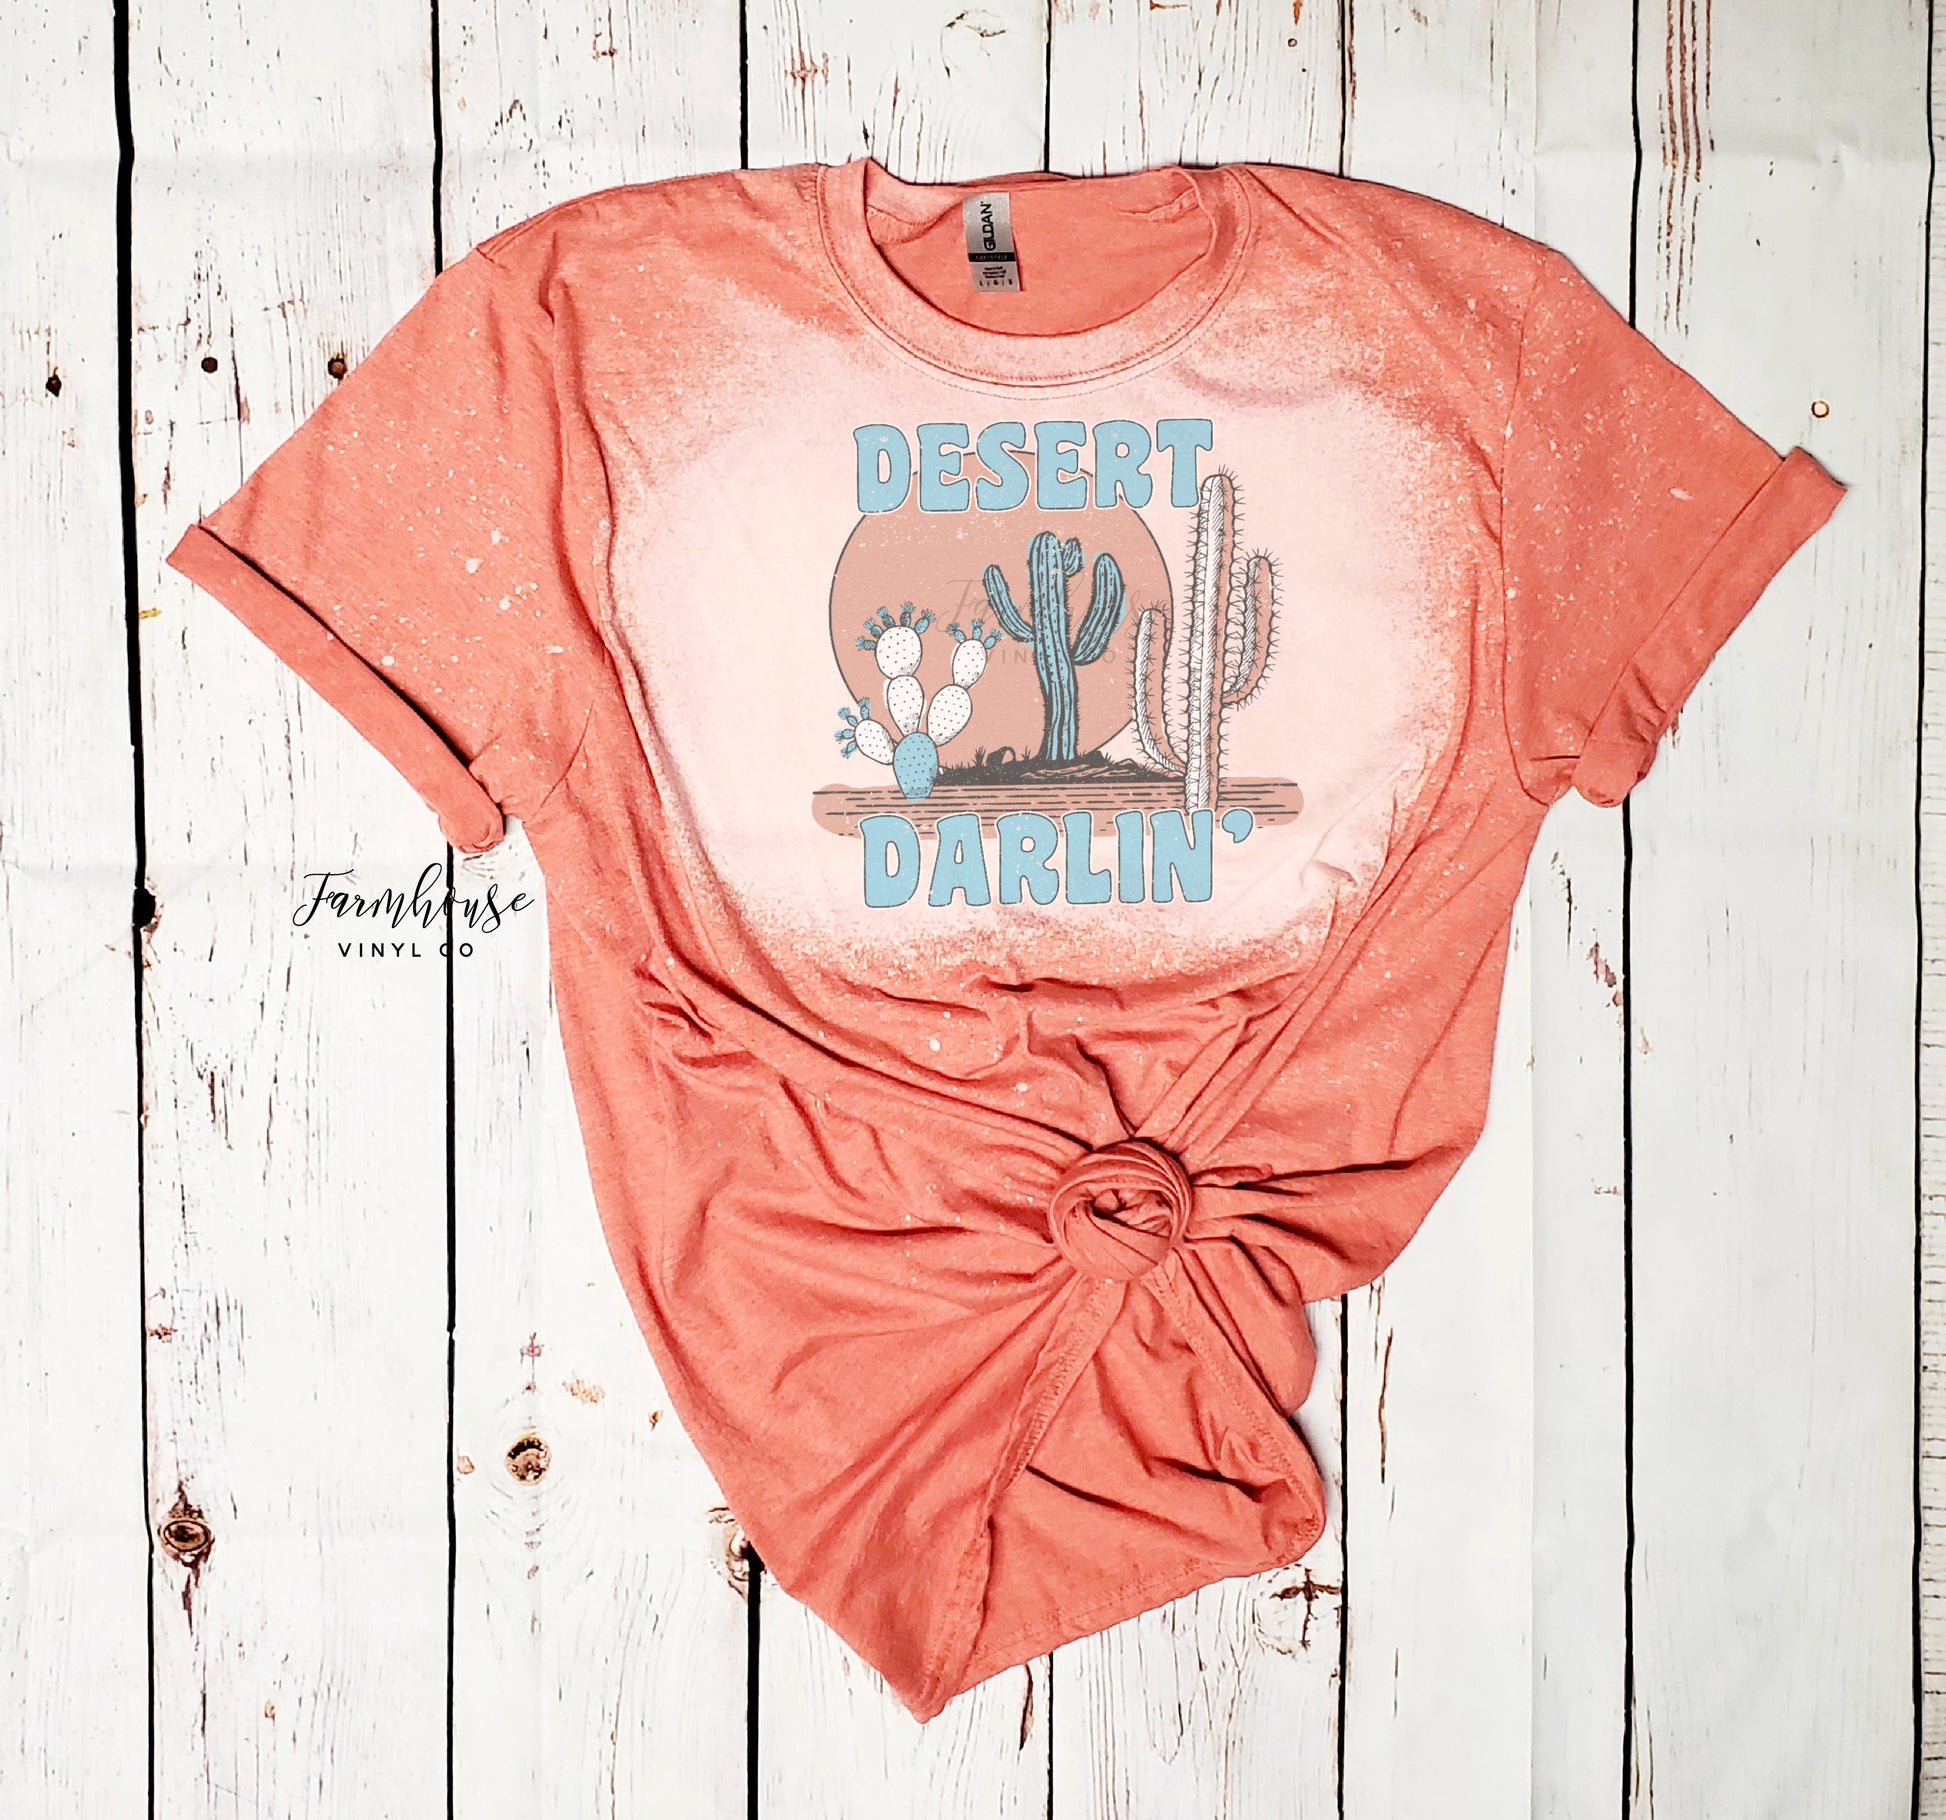 Desert Darlin' Cactus Bleached Shirt - Farmhouse Vinyl Co